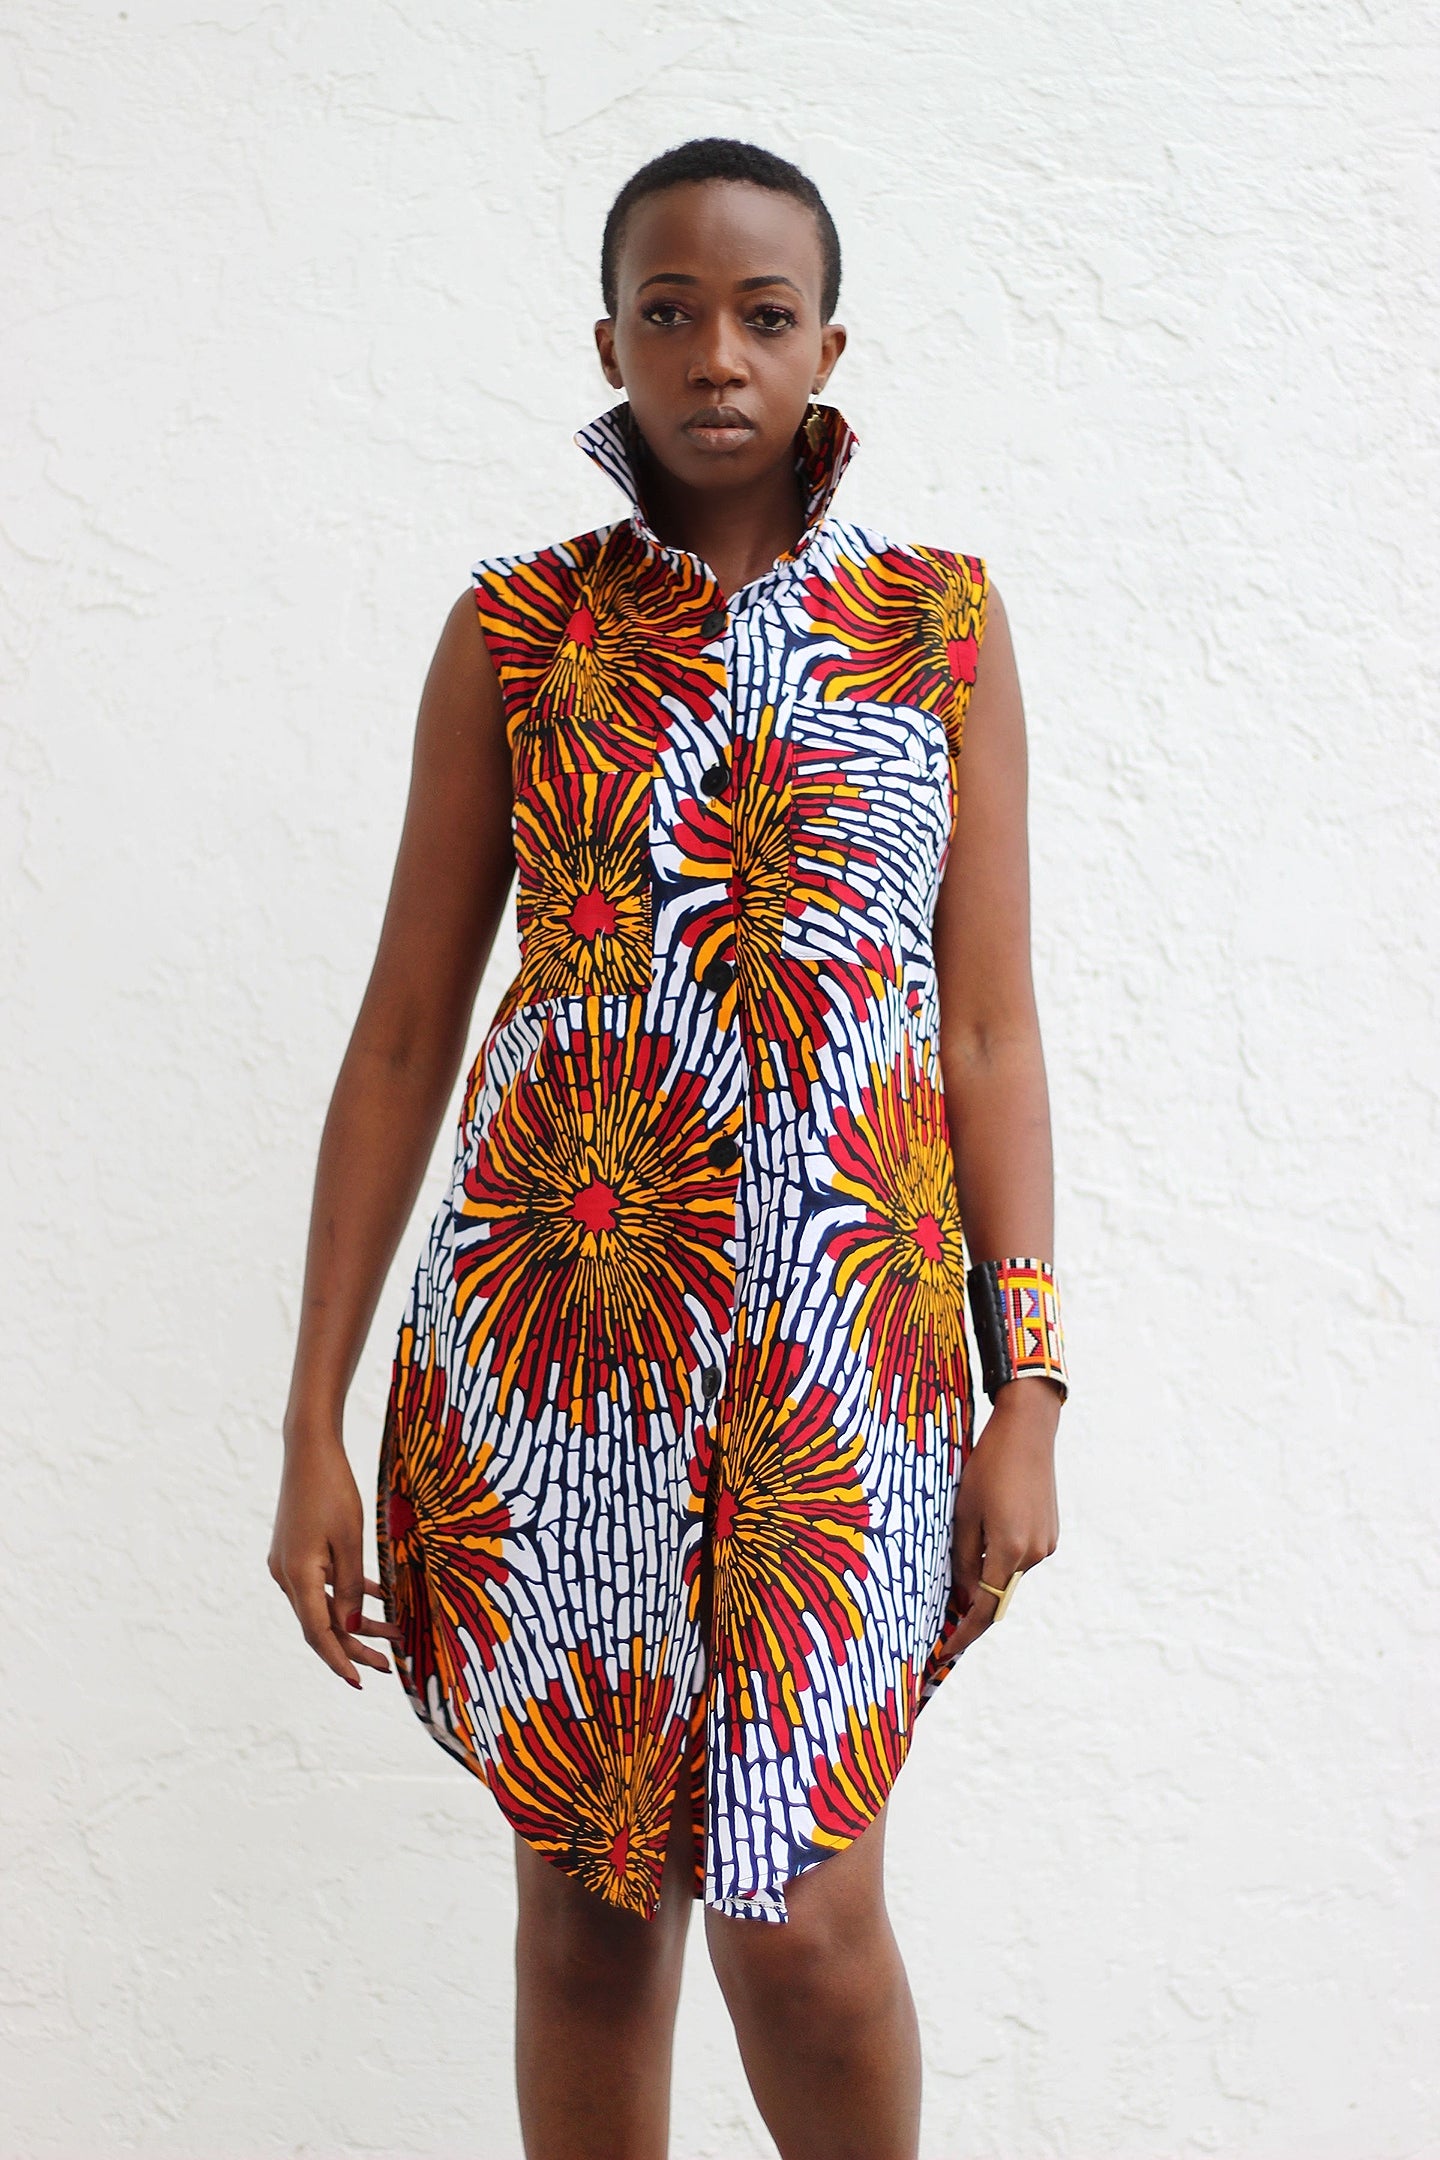 African Print /Ankara /Kitenge Zao Dress Top - White/Red/Orange Floral Print - Africas Closet